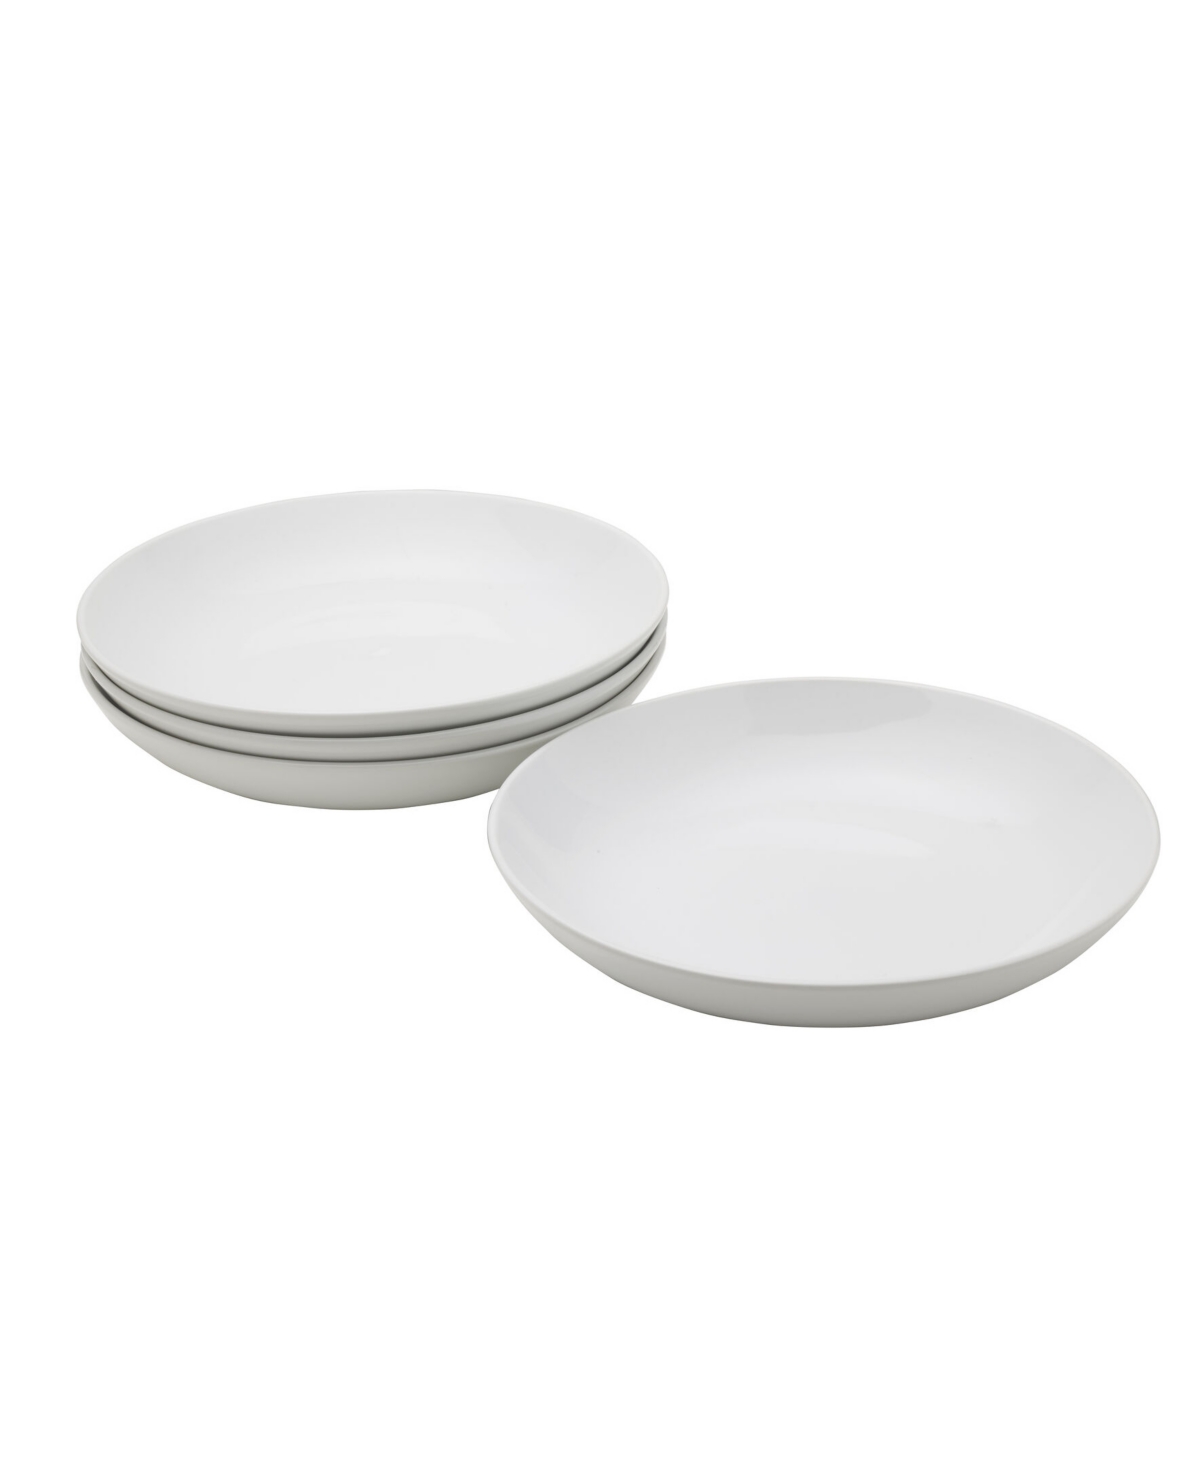 Everyday Whiteware Dinner Bowl 4 Piece Set - White